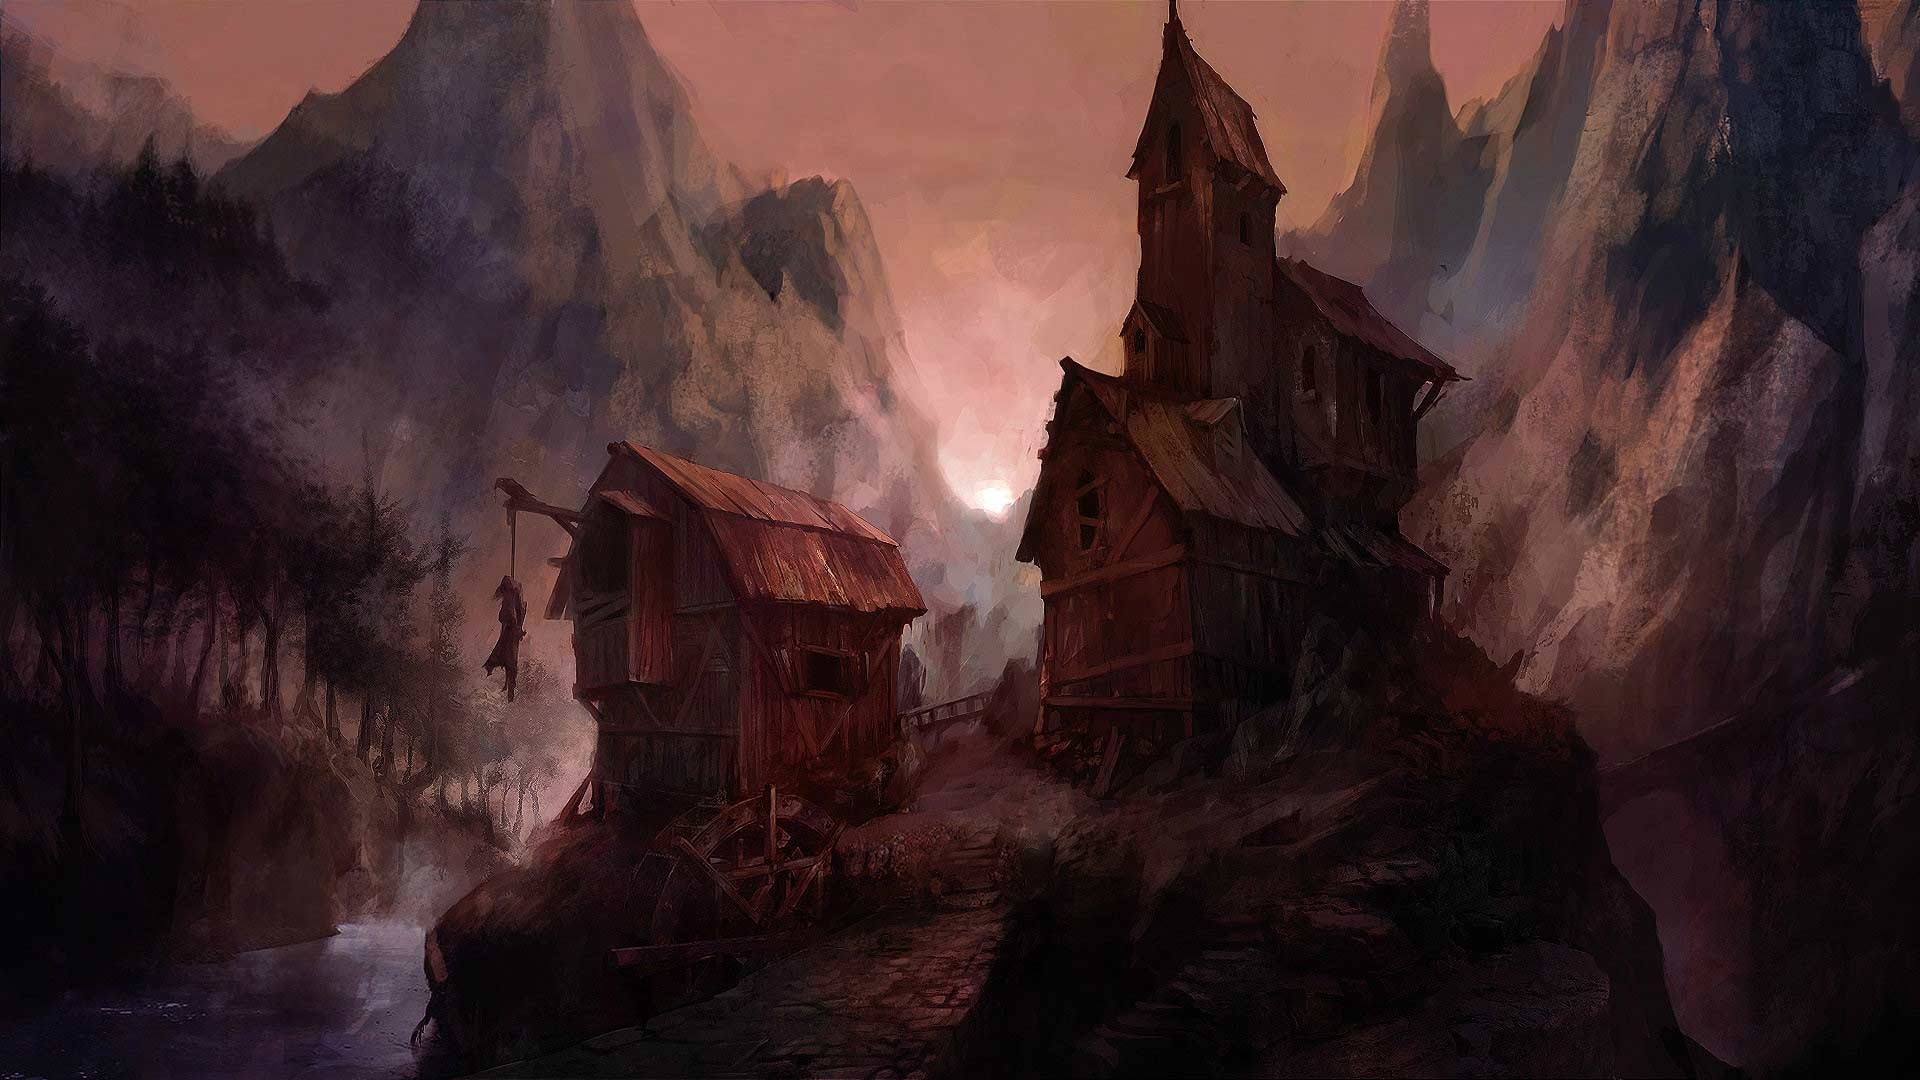 General 1920x1080 Castlevania: Mirror of Fate video games concept art fantasy art mountains landscape video game art